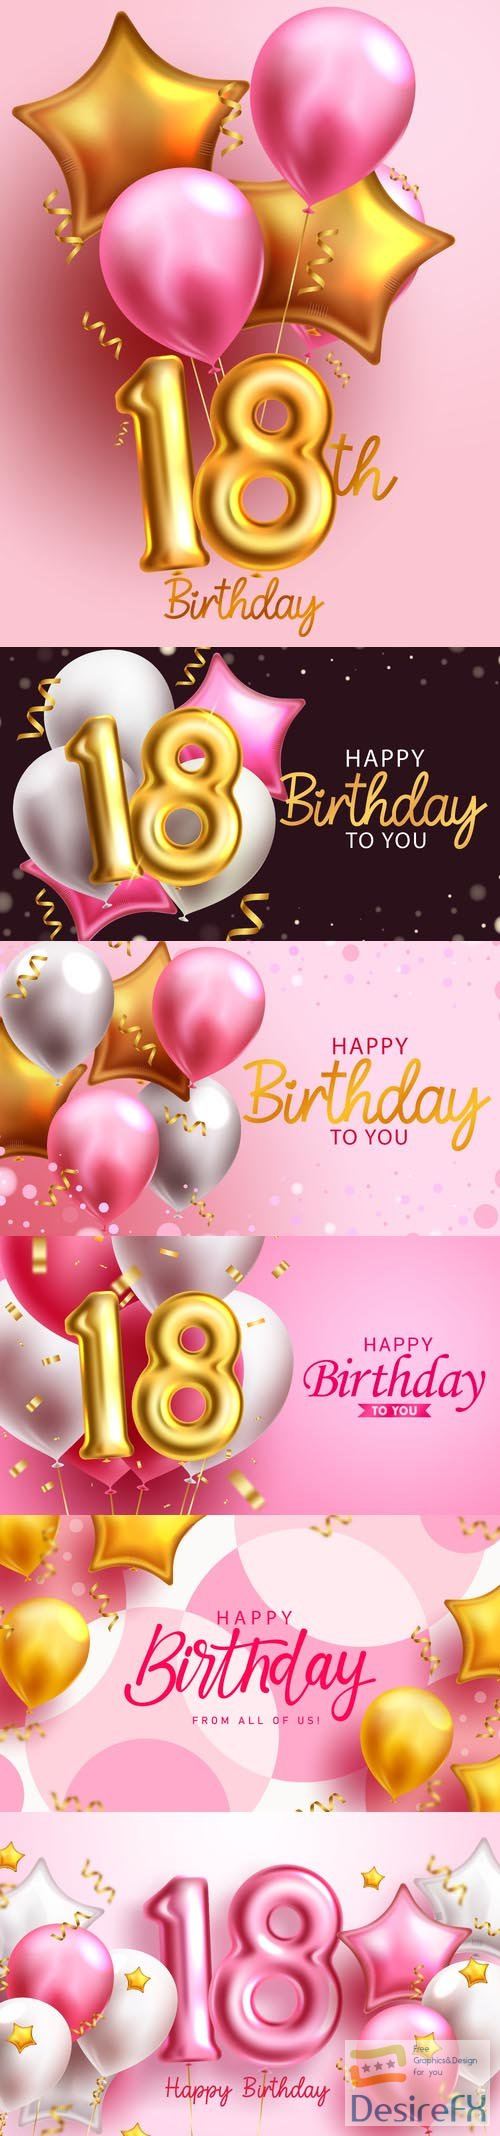 18th birthday balloon vector design, happy birthday text design